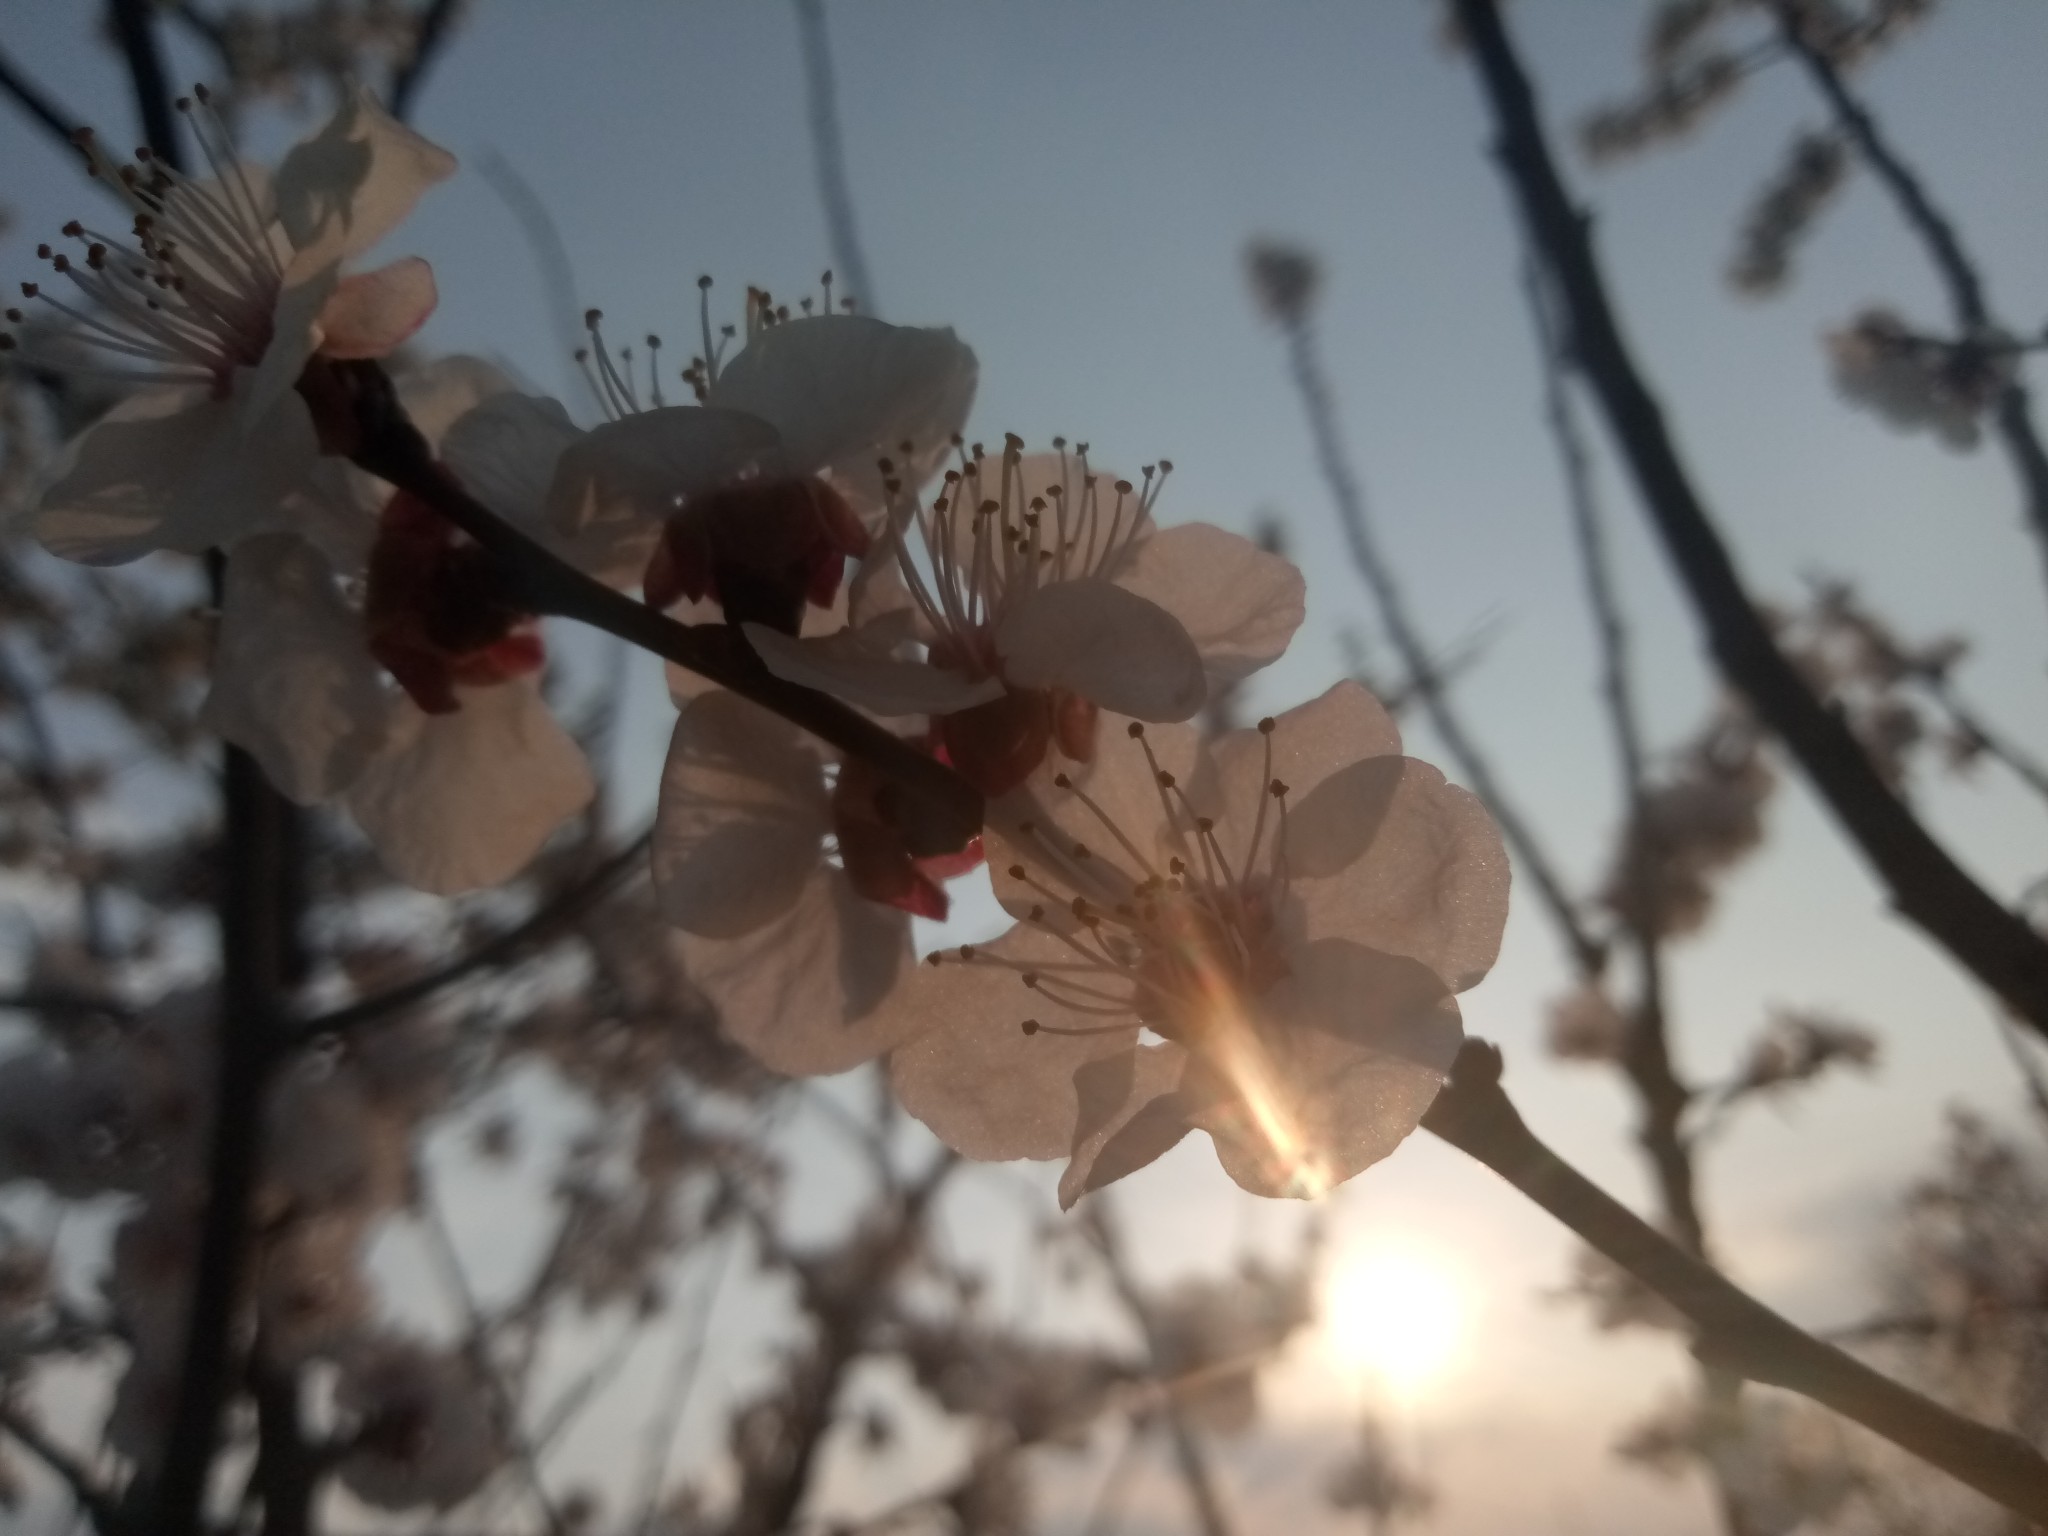 Flowering apricot tree 